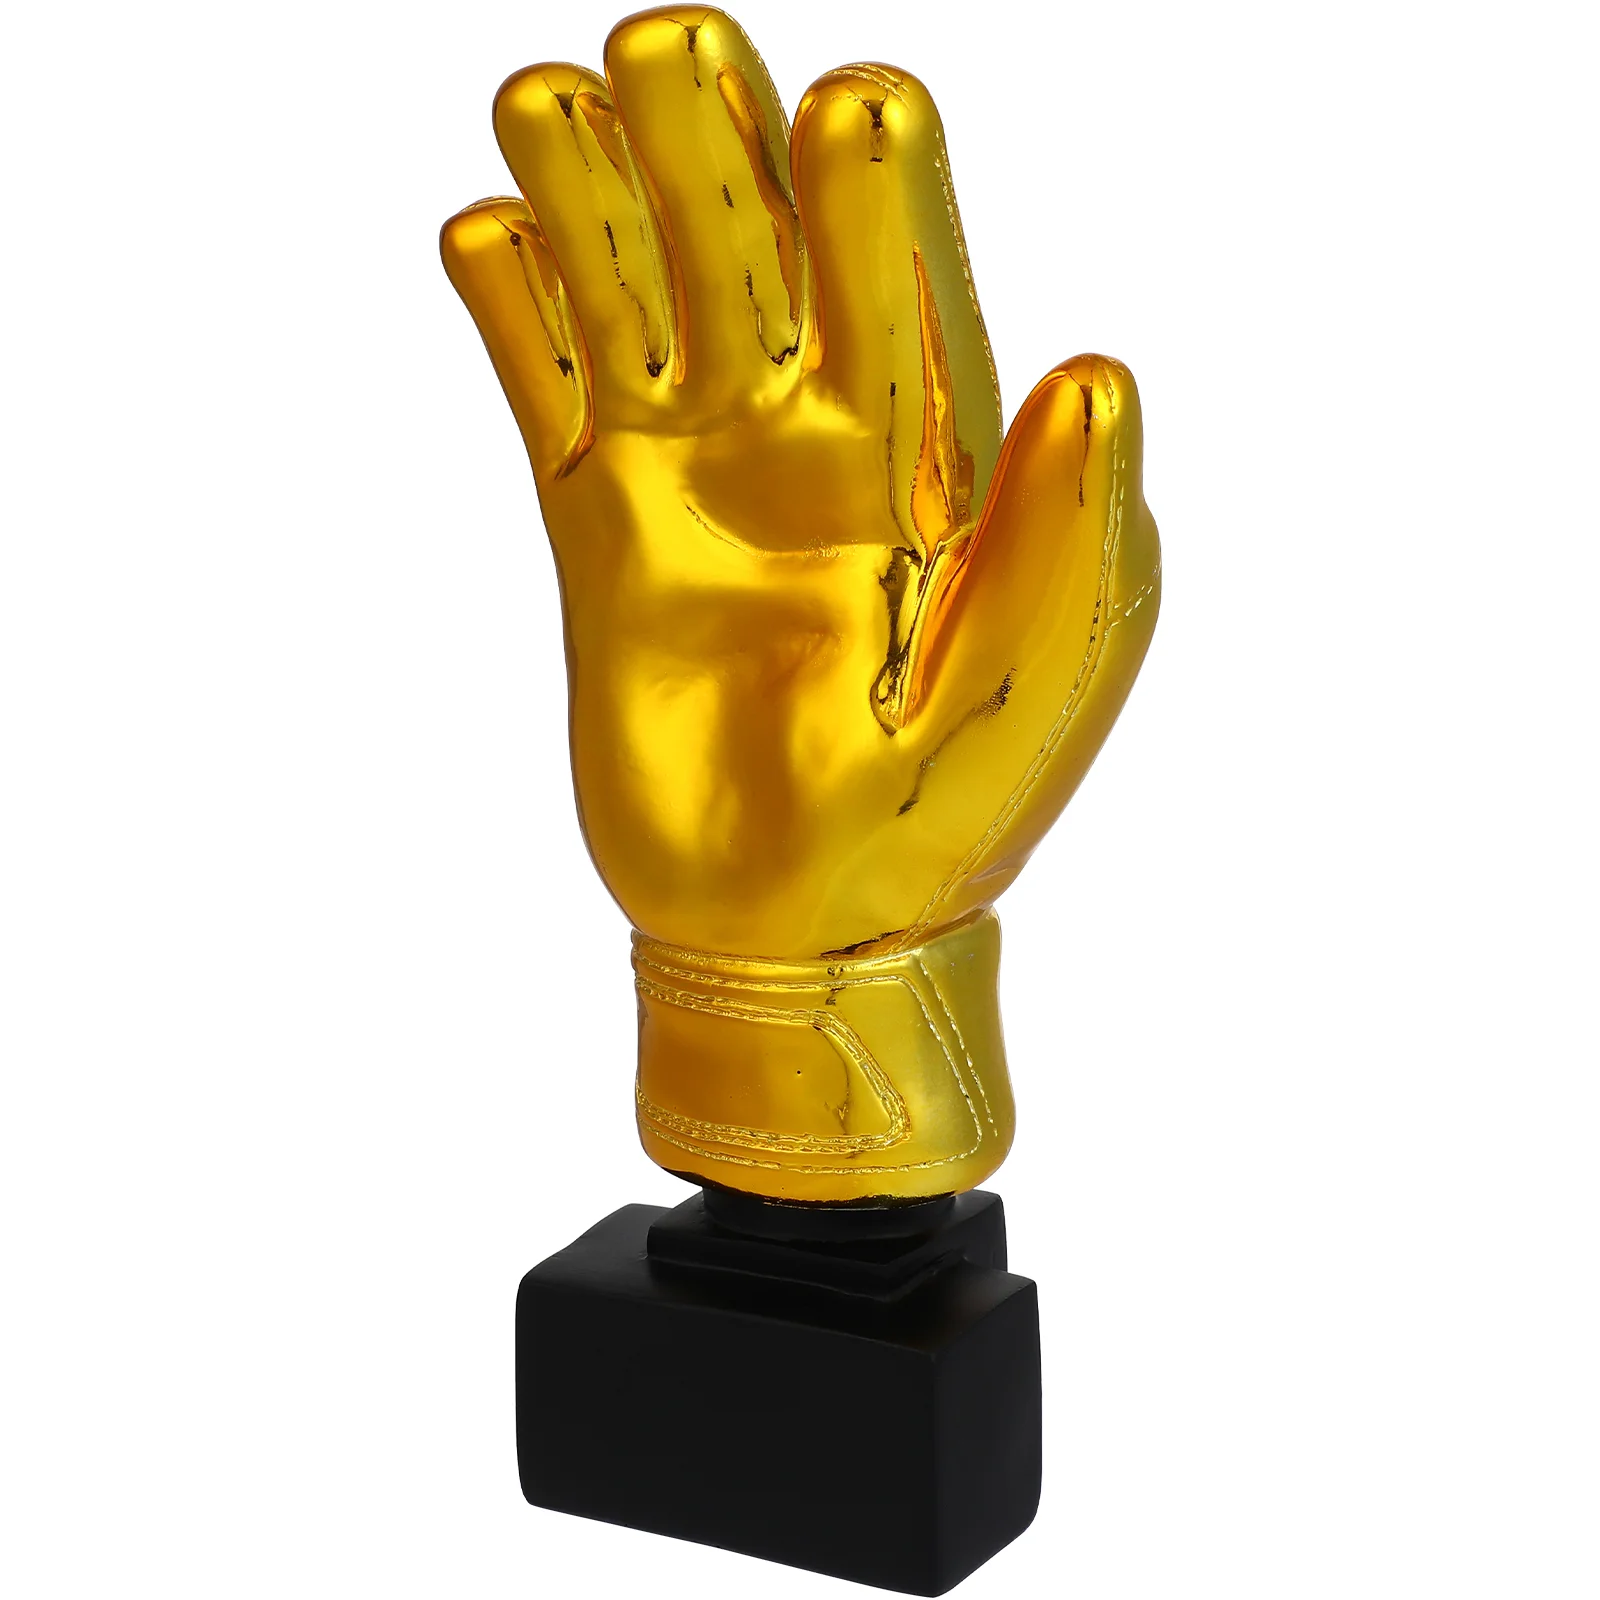 Soccer Trophy Plastic Remembrance Gifts Gold Cup Kid Baseball Glove Goalkeeper Award Adult Winner